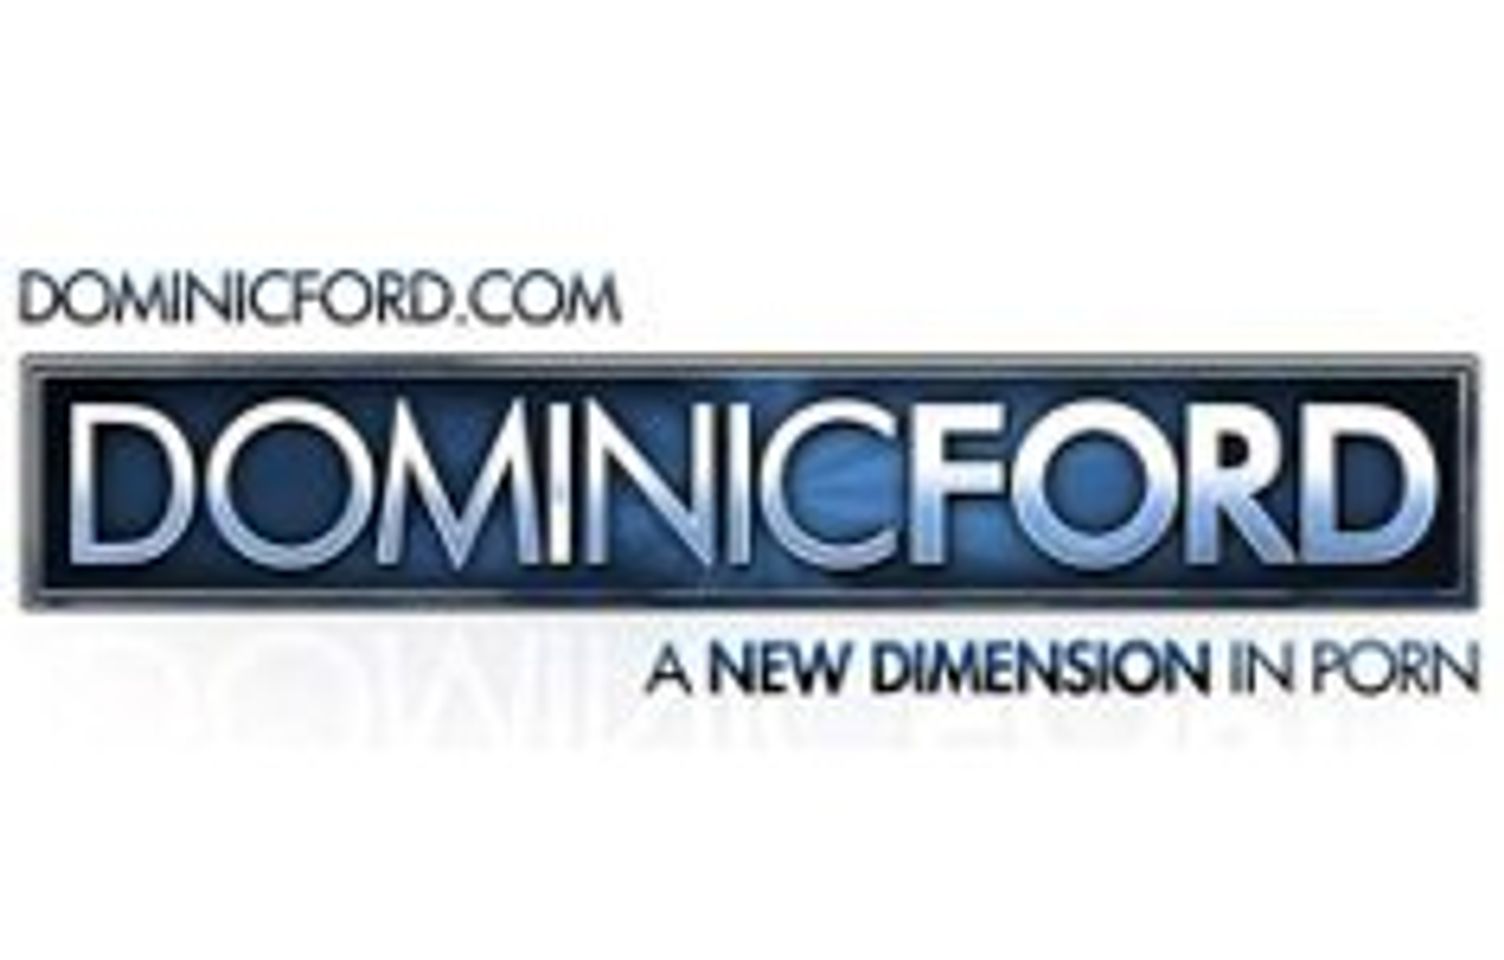 DominicFord.com Re-Launches